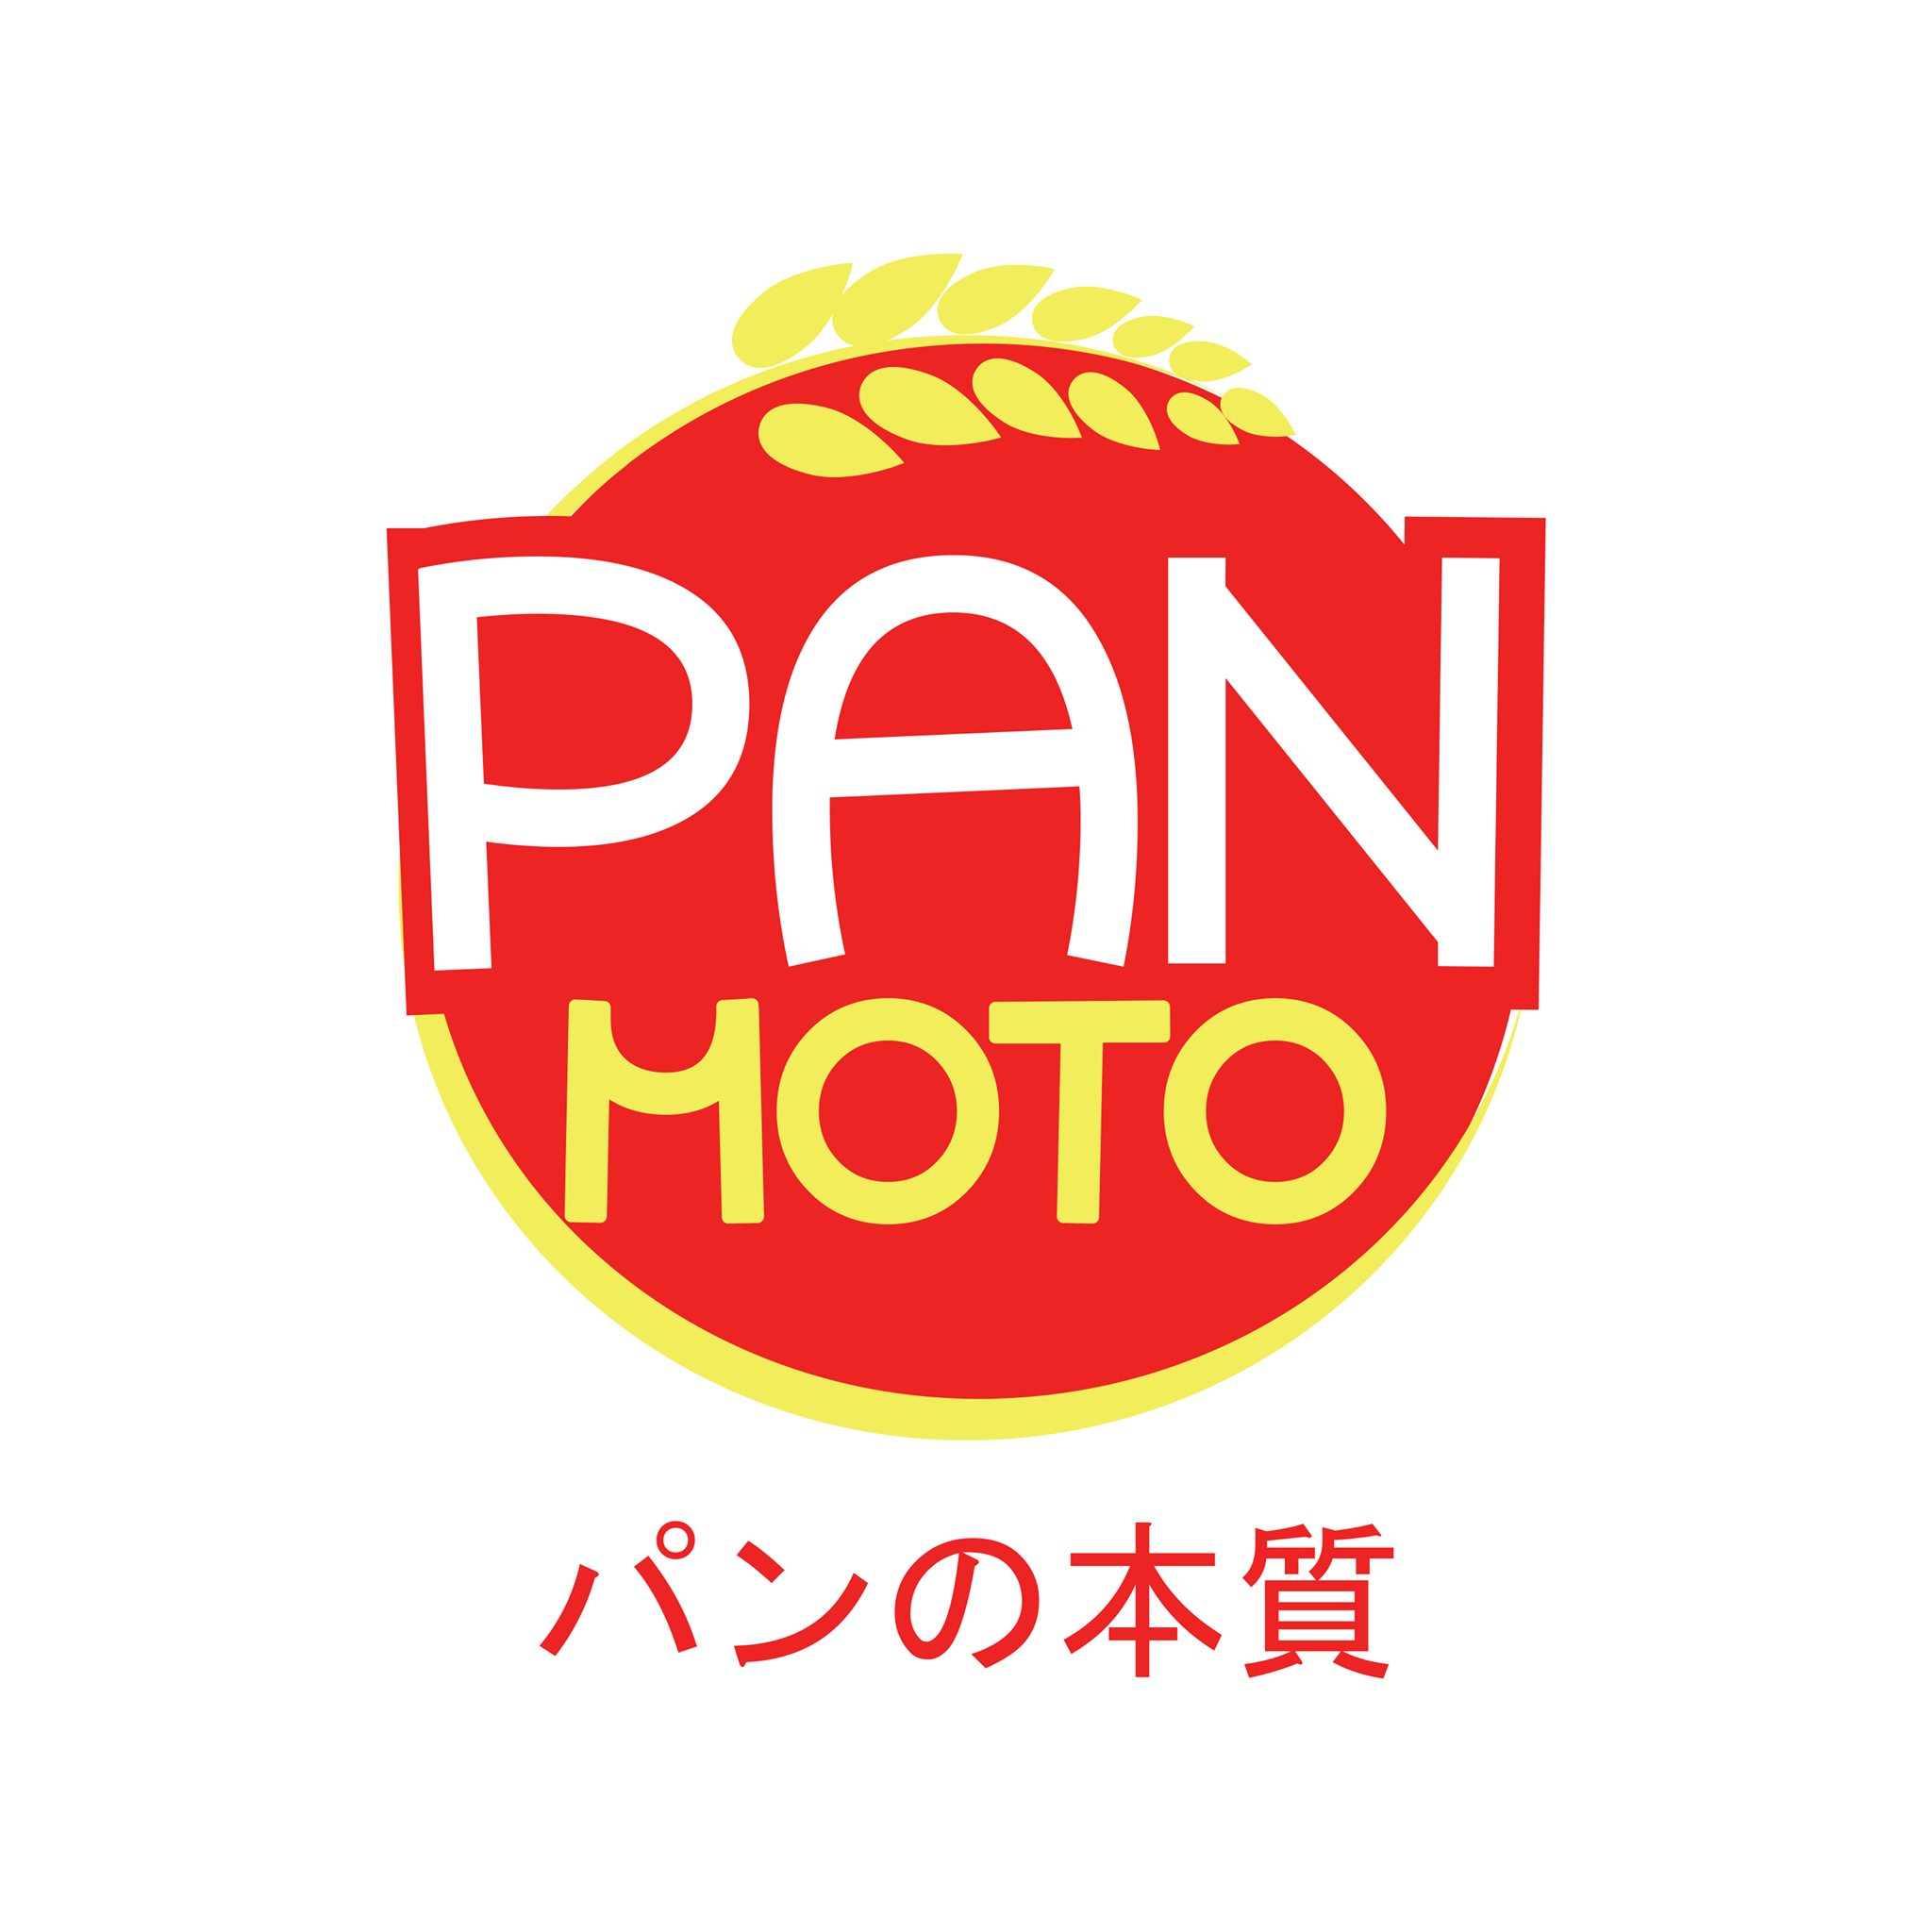 panmoto logo